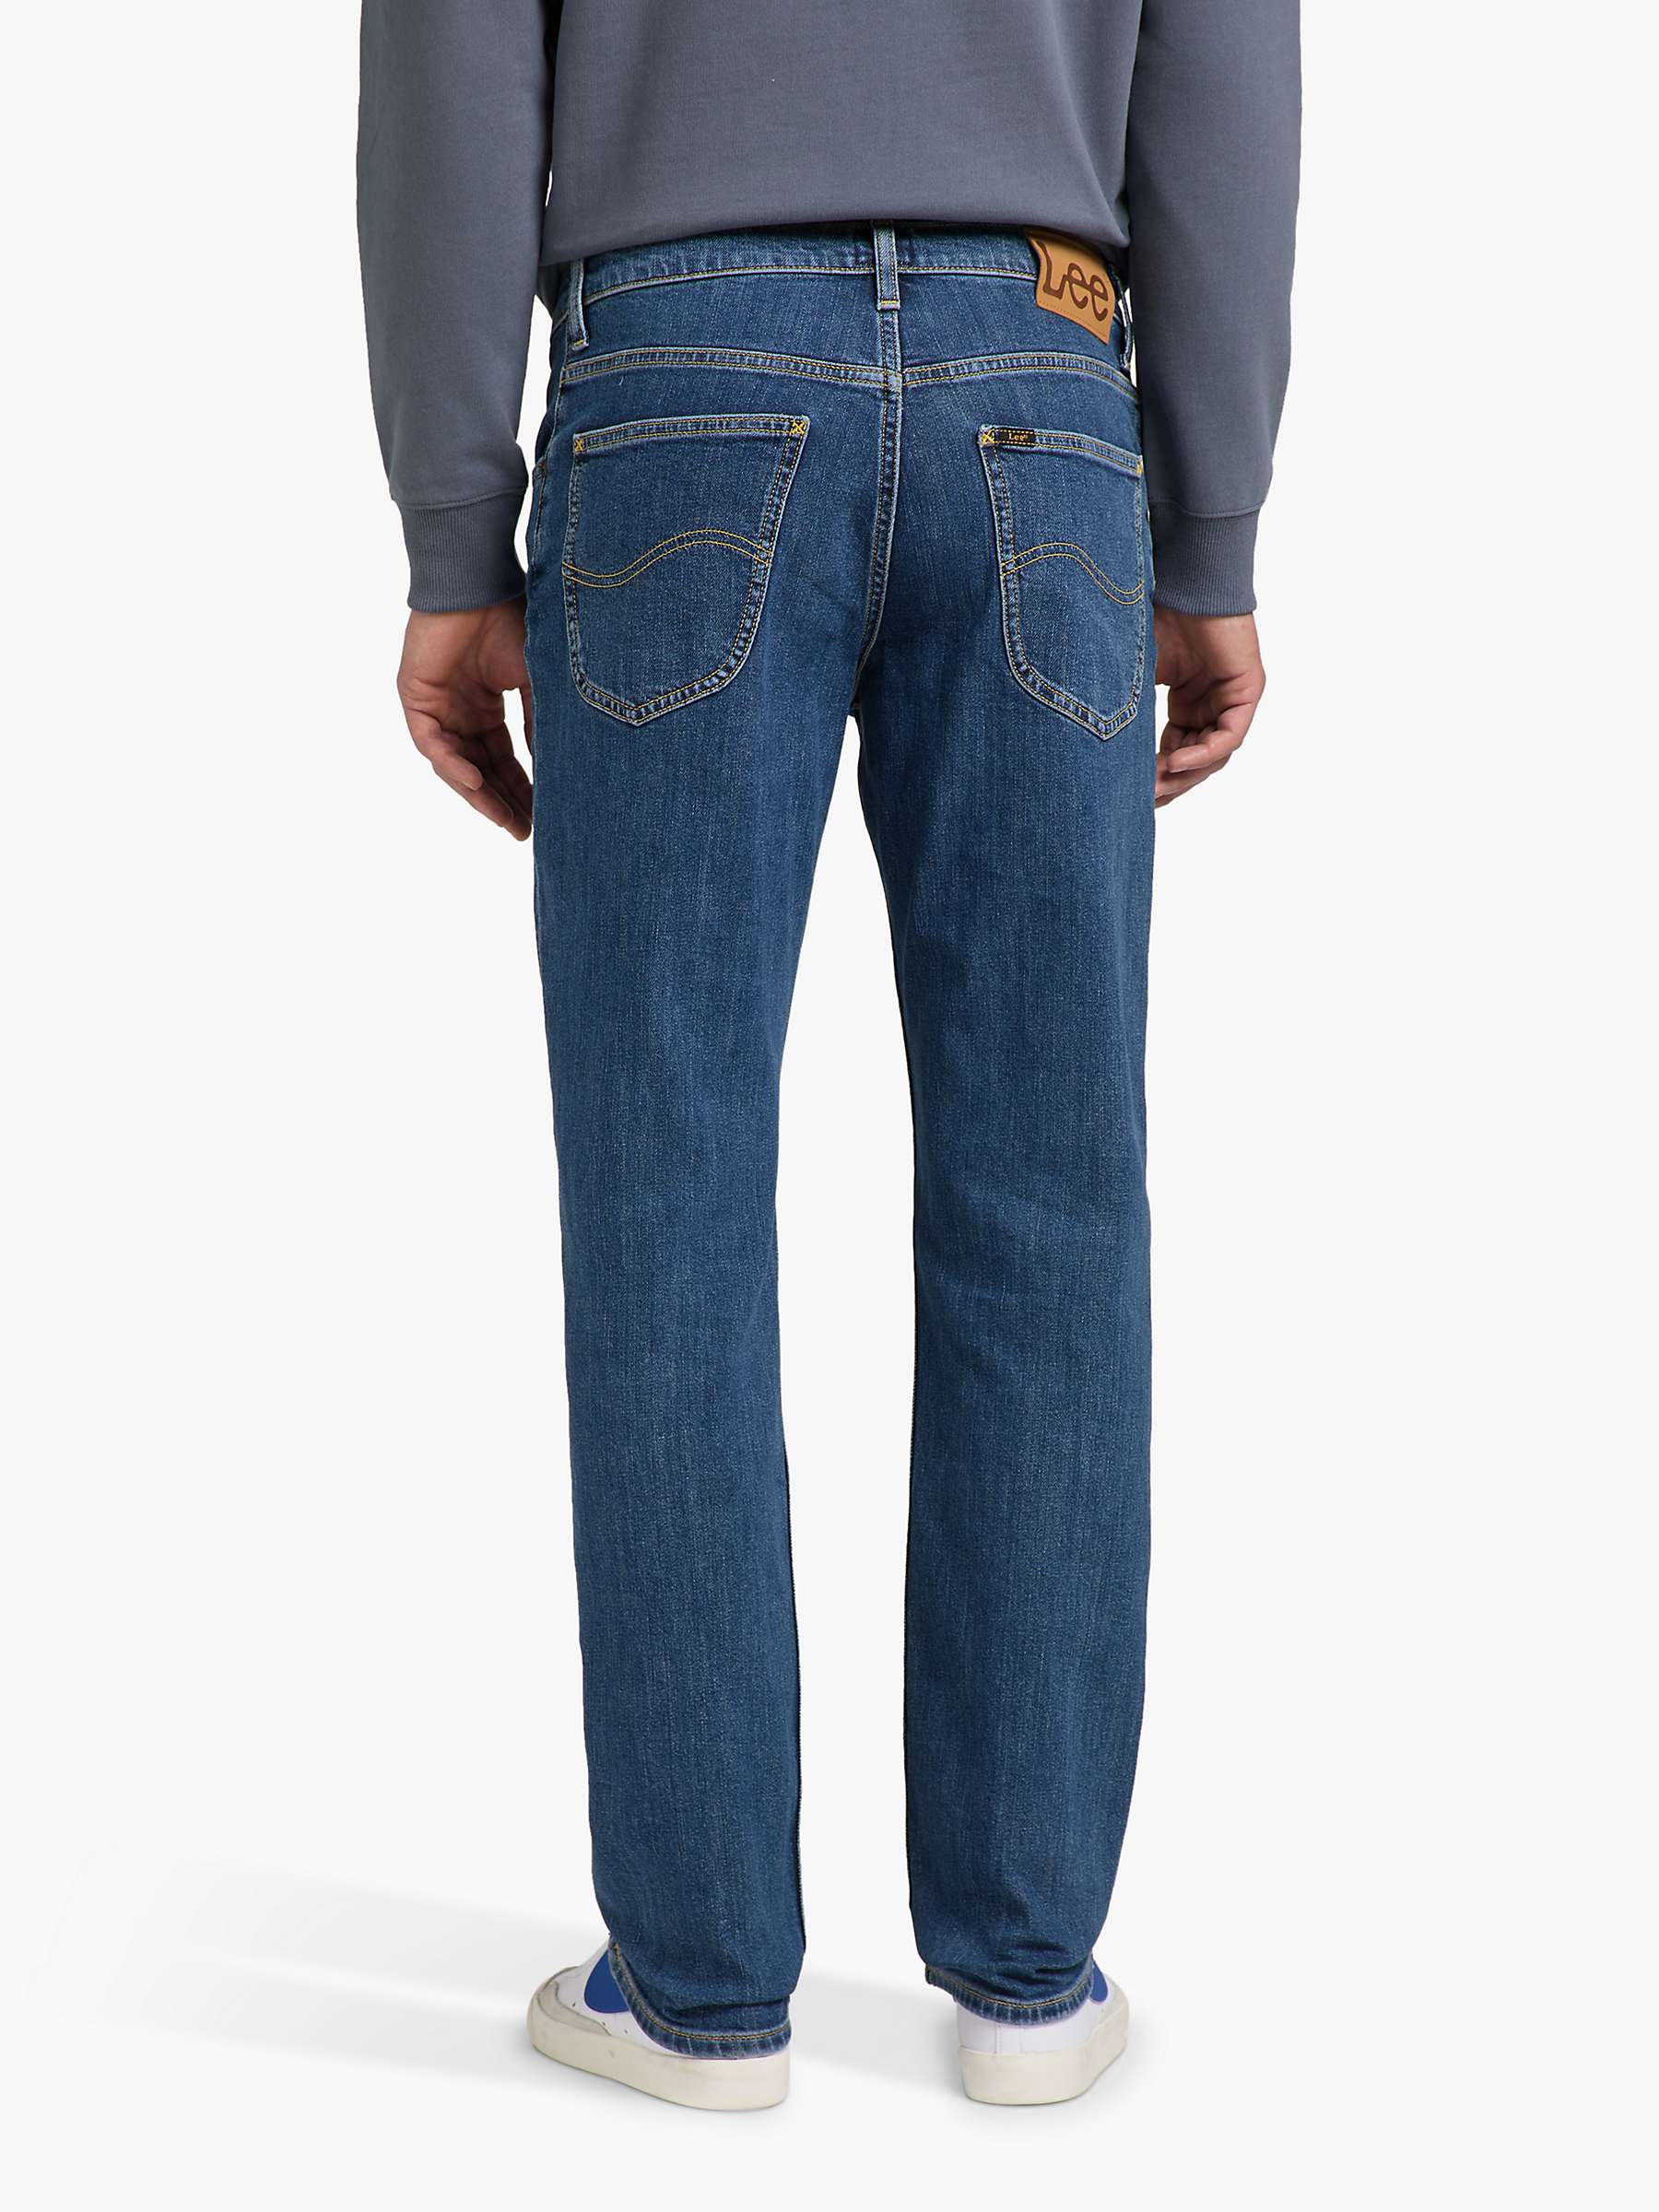 Buy Lee Slim Stonewash Denim Jeans, Blue Online at johnlewis.com